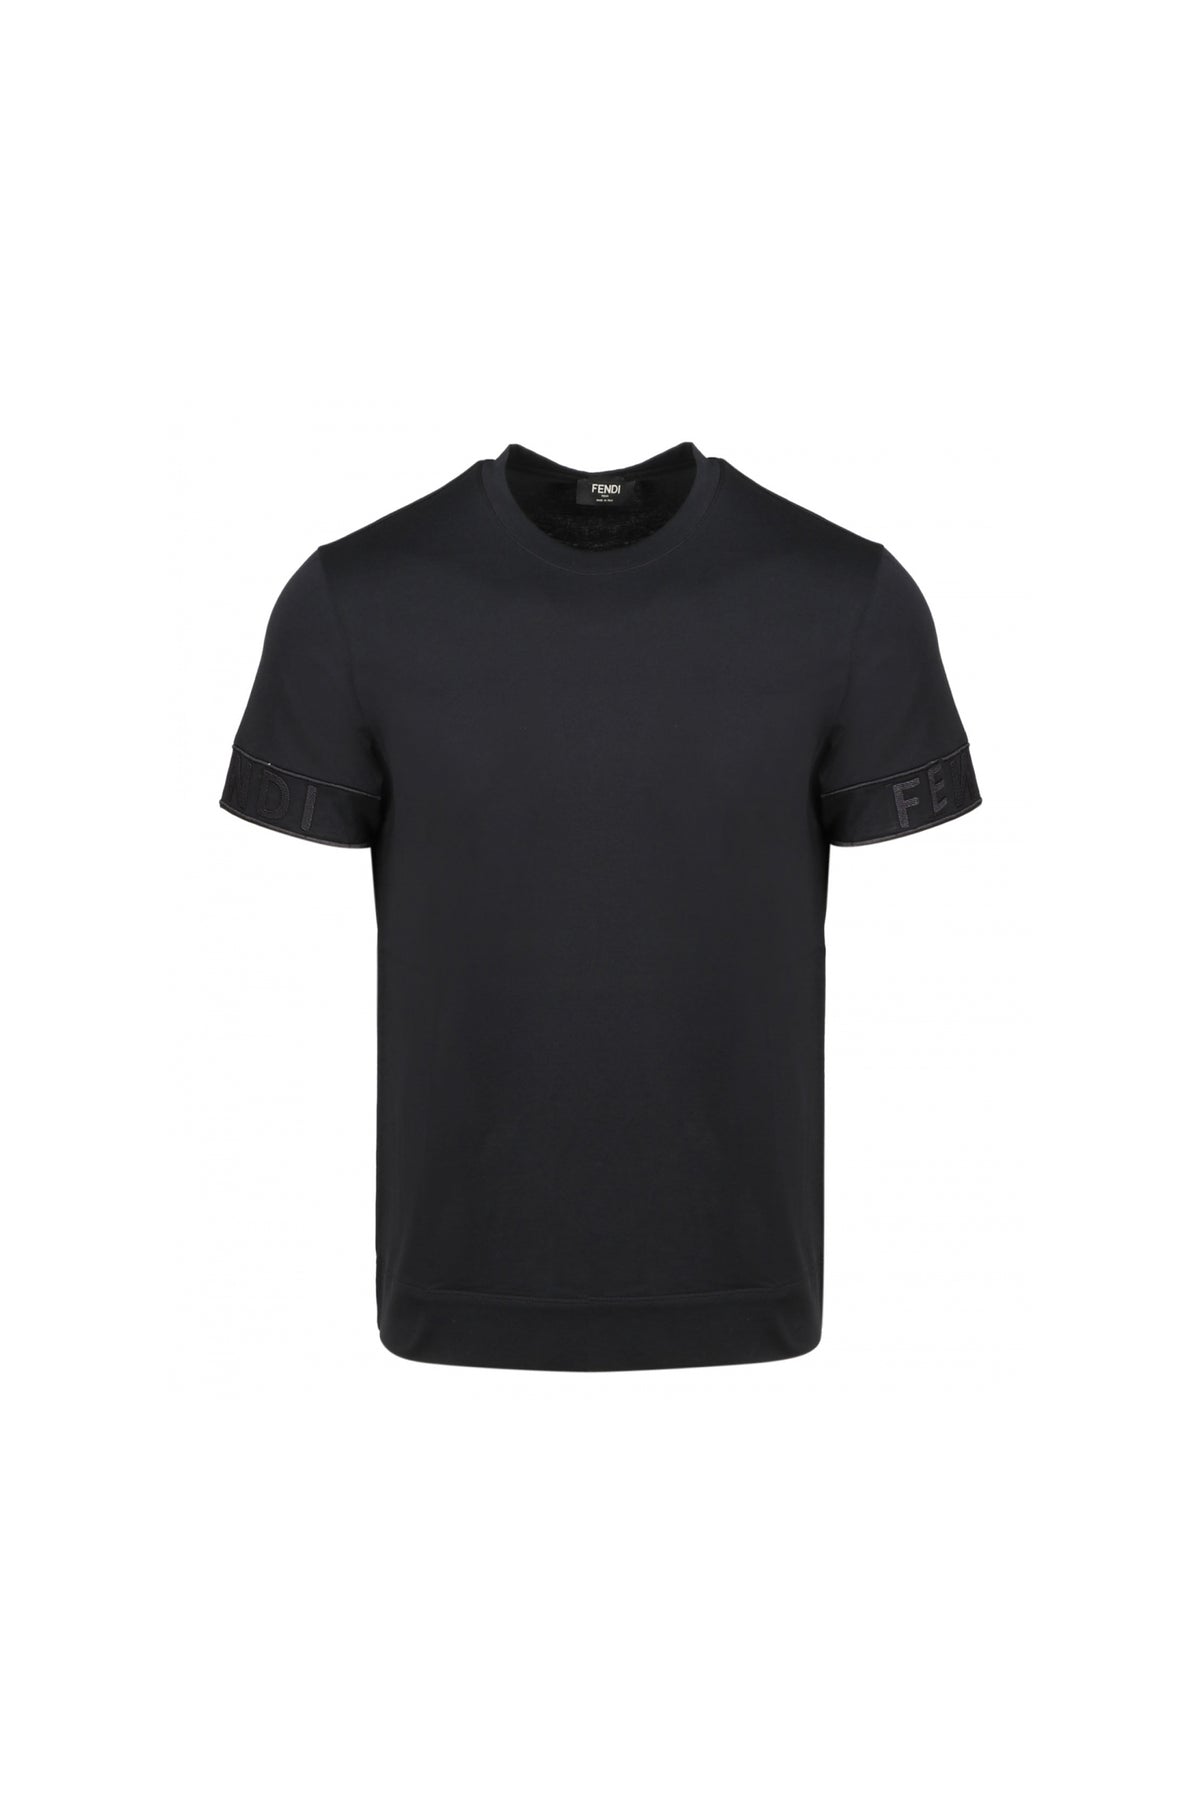 Fendi Black Tape hand logo T-Shirt